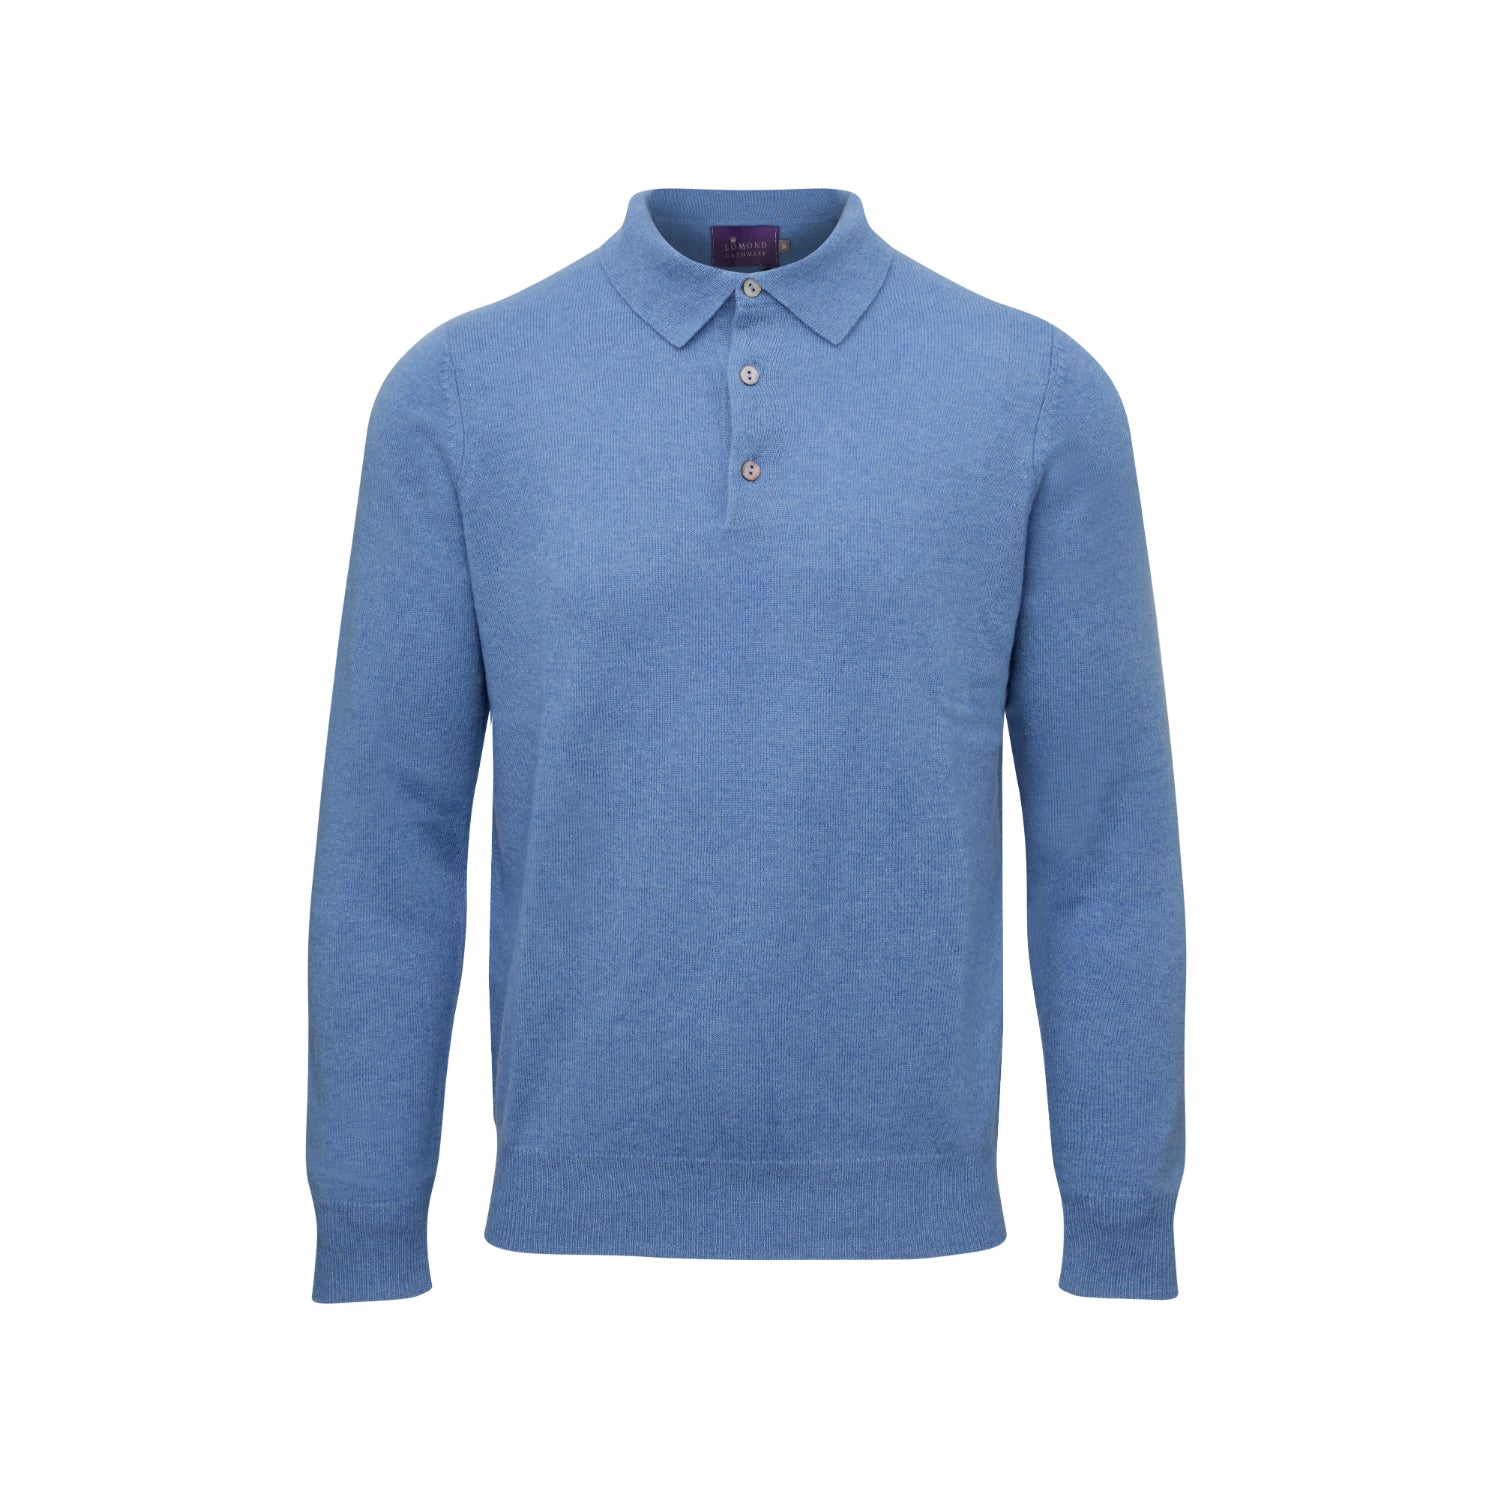 Lomond - Mens Cashmere Polo Shirt Sweater - The Cashmere Choice - Online